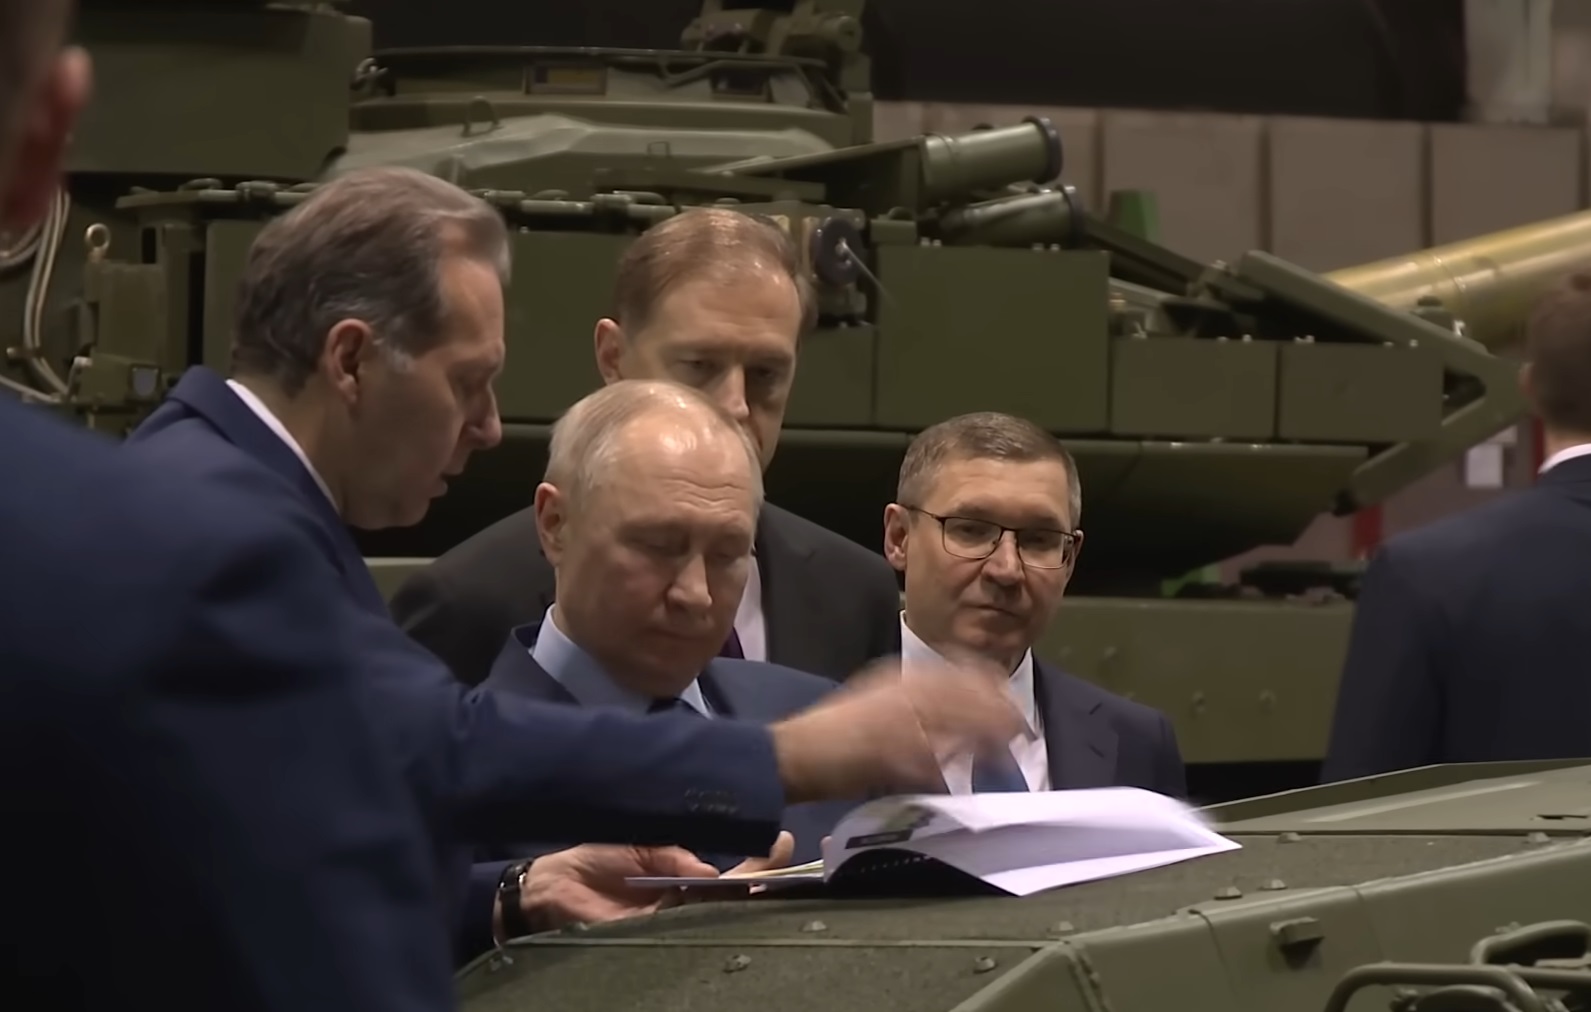 Putin calls T-90M “best tank in the world”